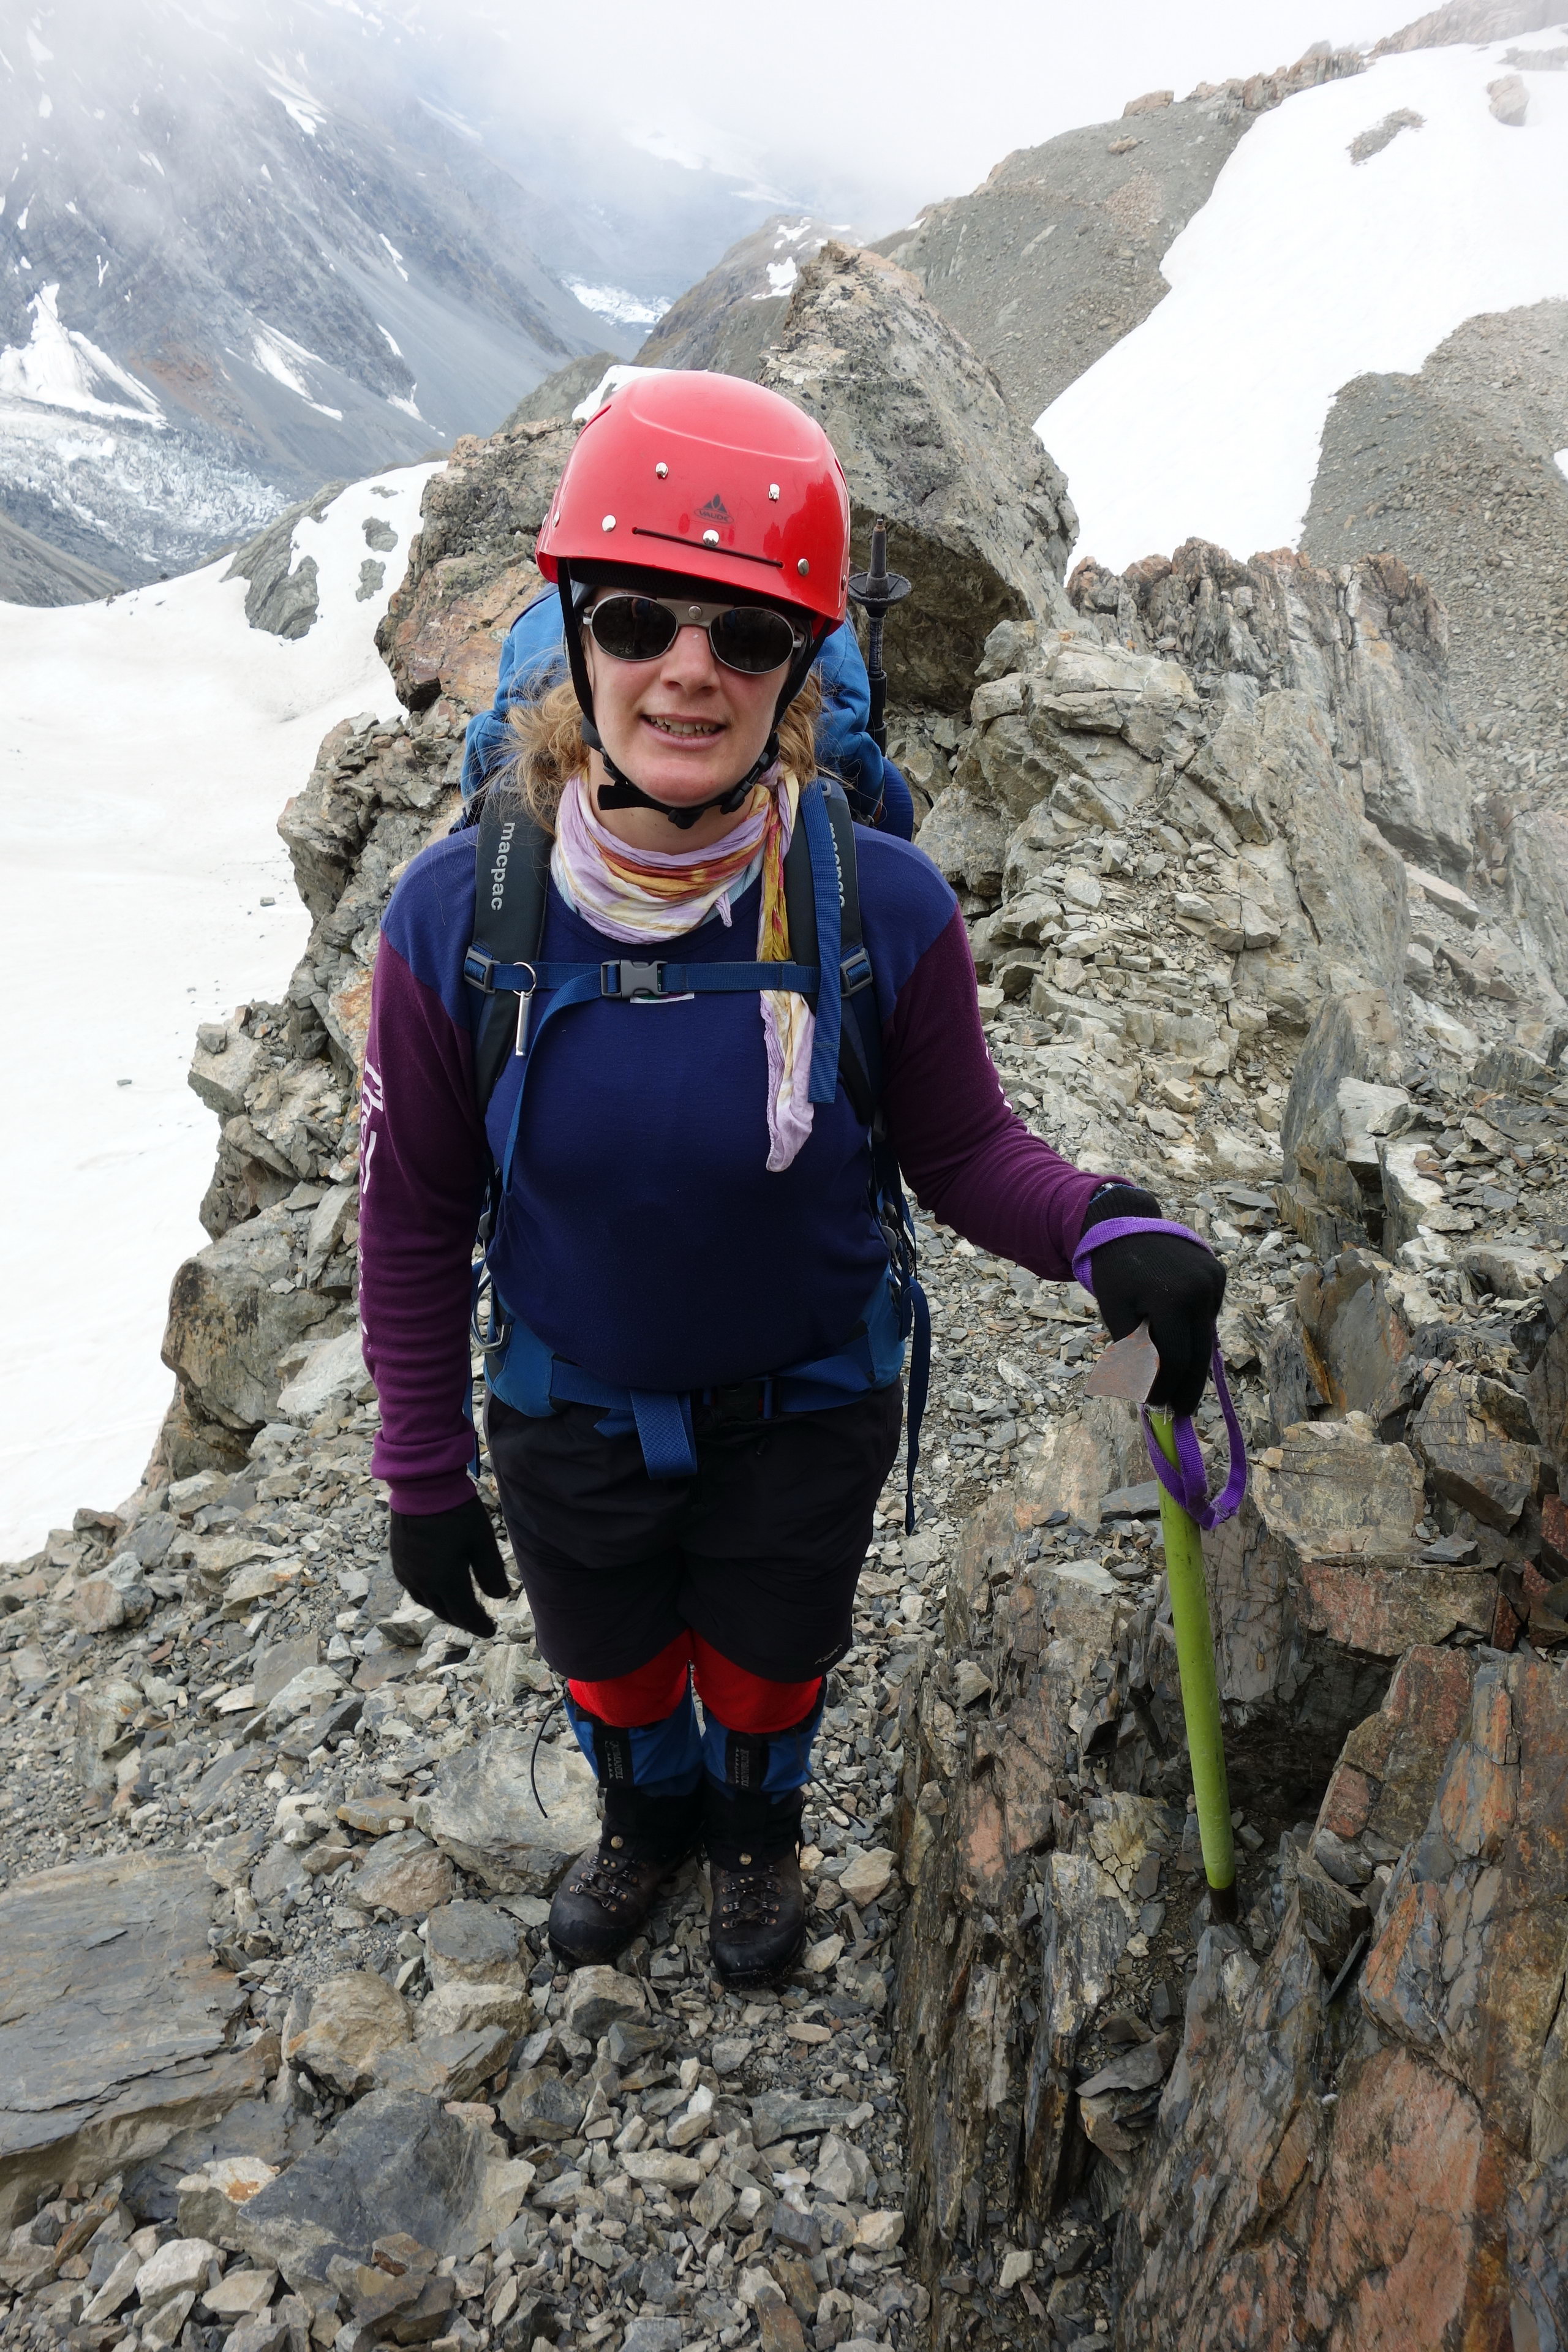 Gina on the ridge (Ball Pass Dec 2013)